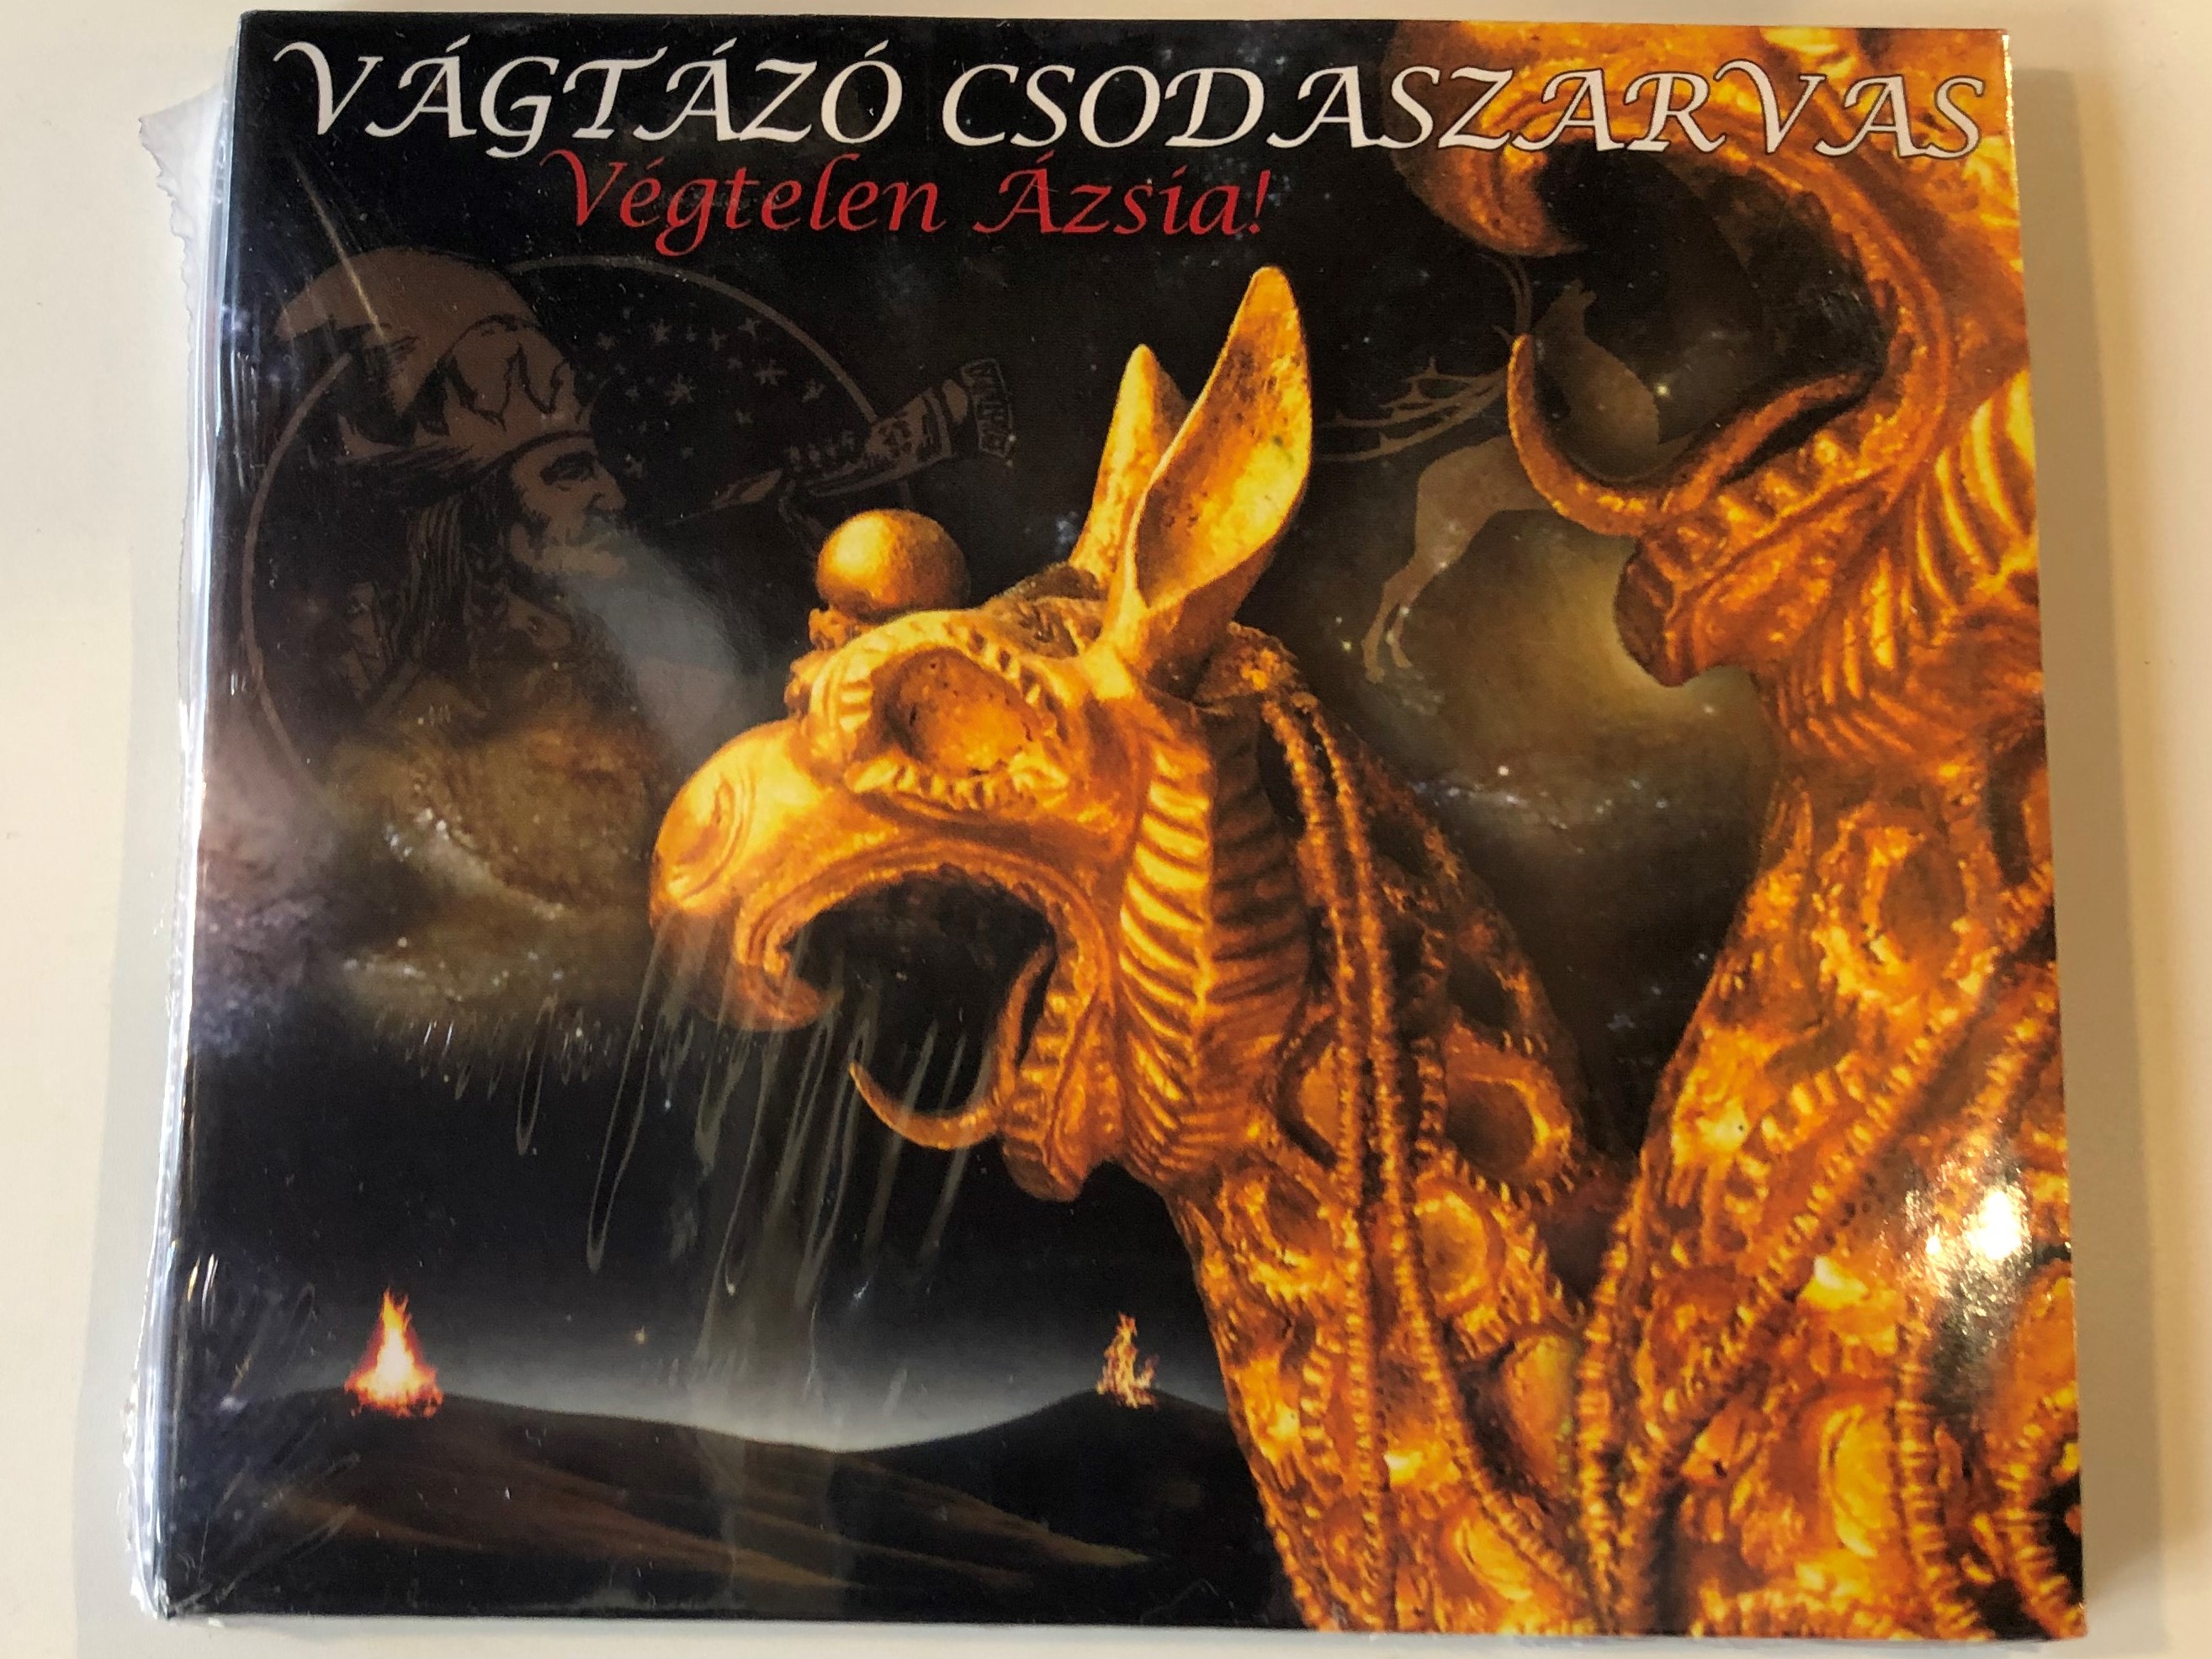 v-gt-z-csodaszarvas-v-gtelen-zsia-fon-records-audio-cd-2008-5998048524723-1-.jpg